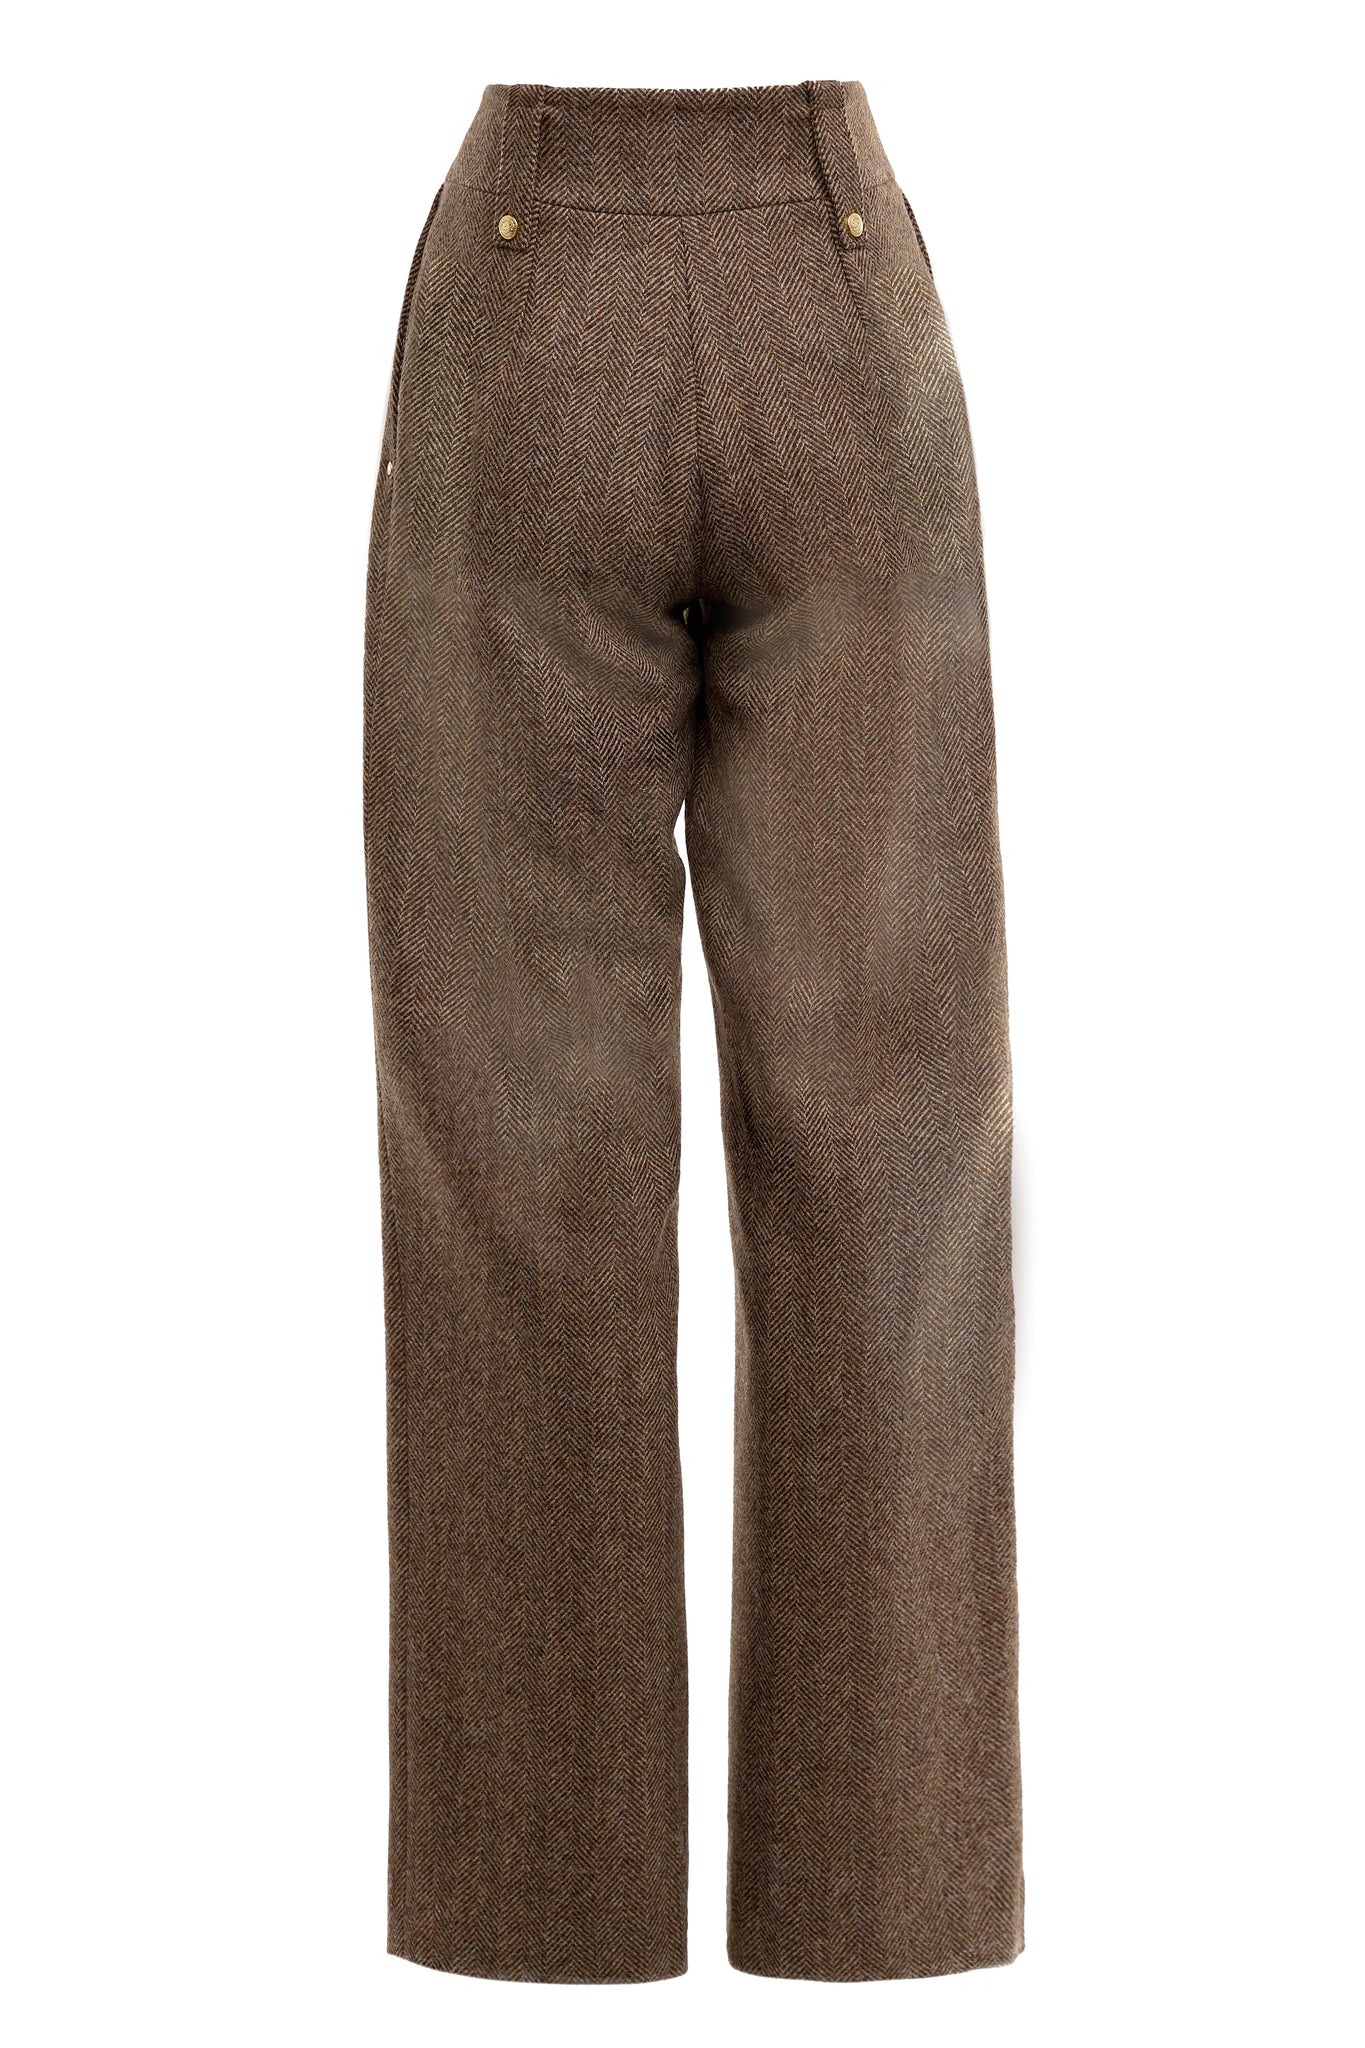 High Waisted Straight Trouser (Large Scale Brown Herringbone